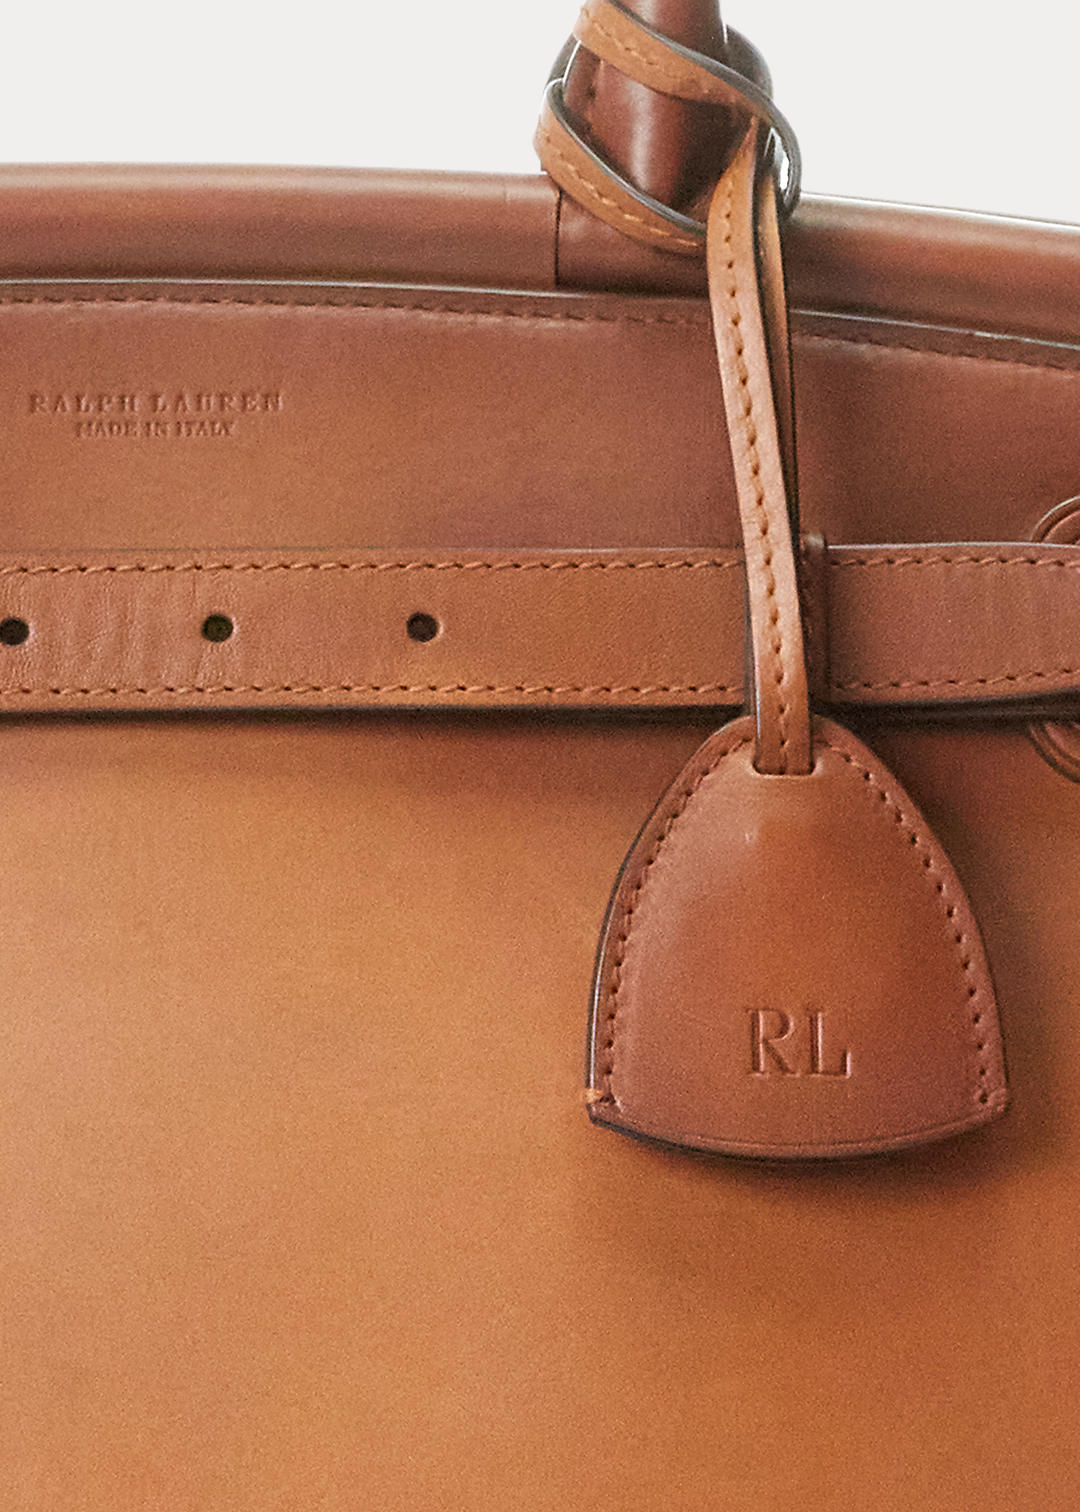 Ralph Lauren Collection Burnished Medium RL50 Handbag 5